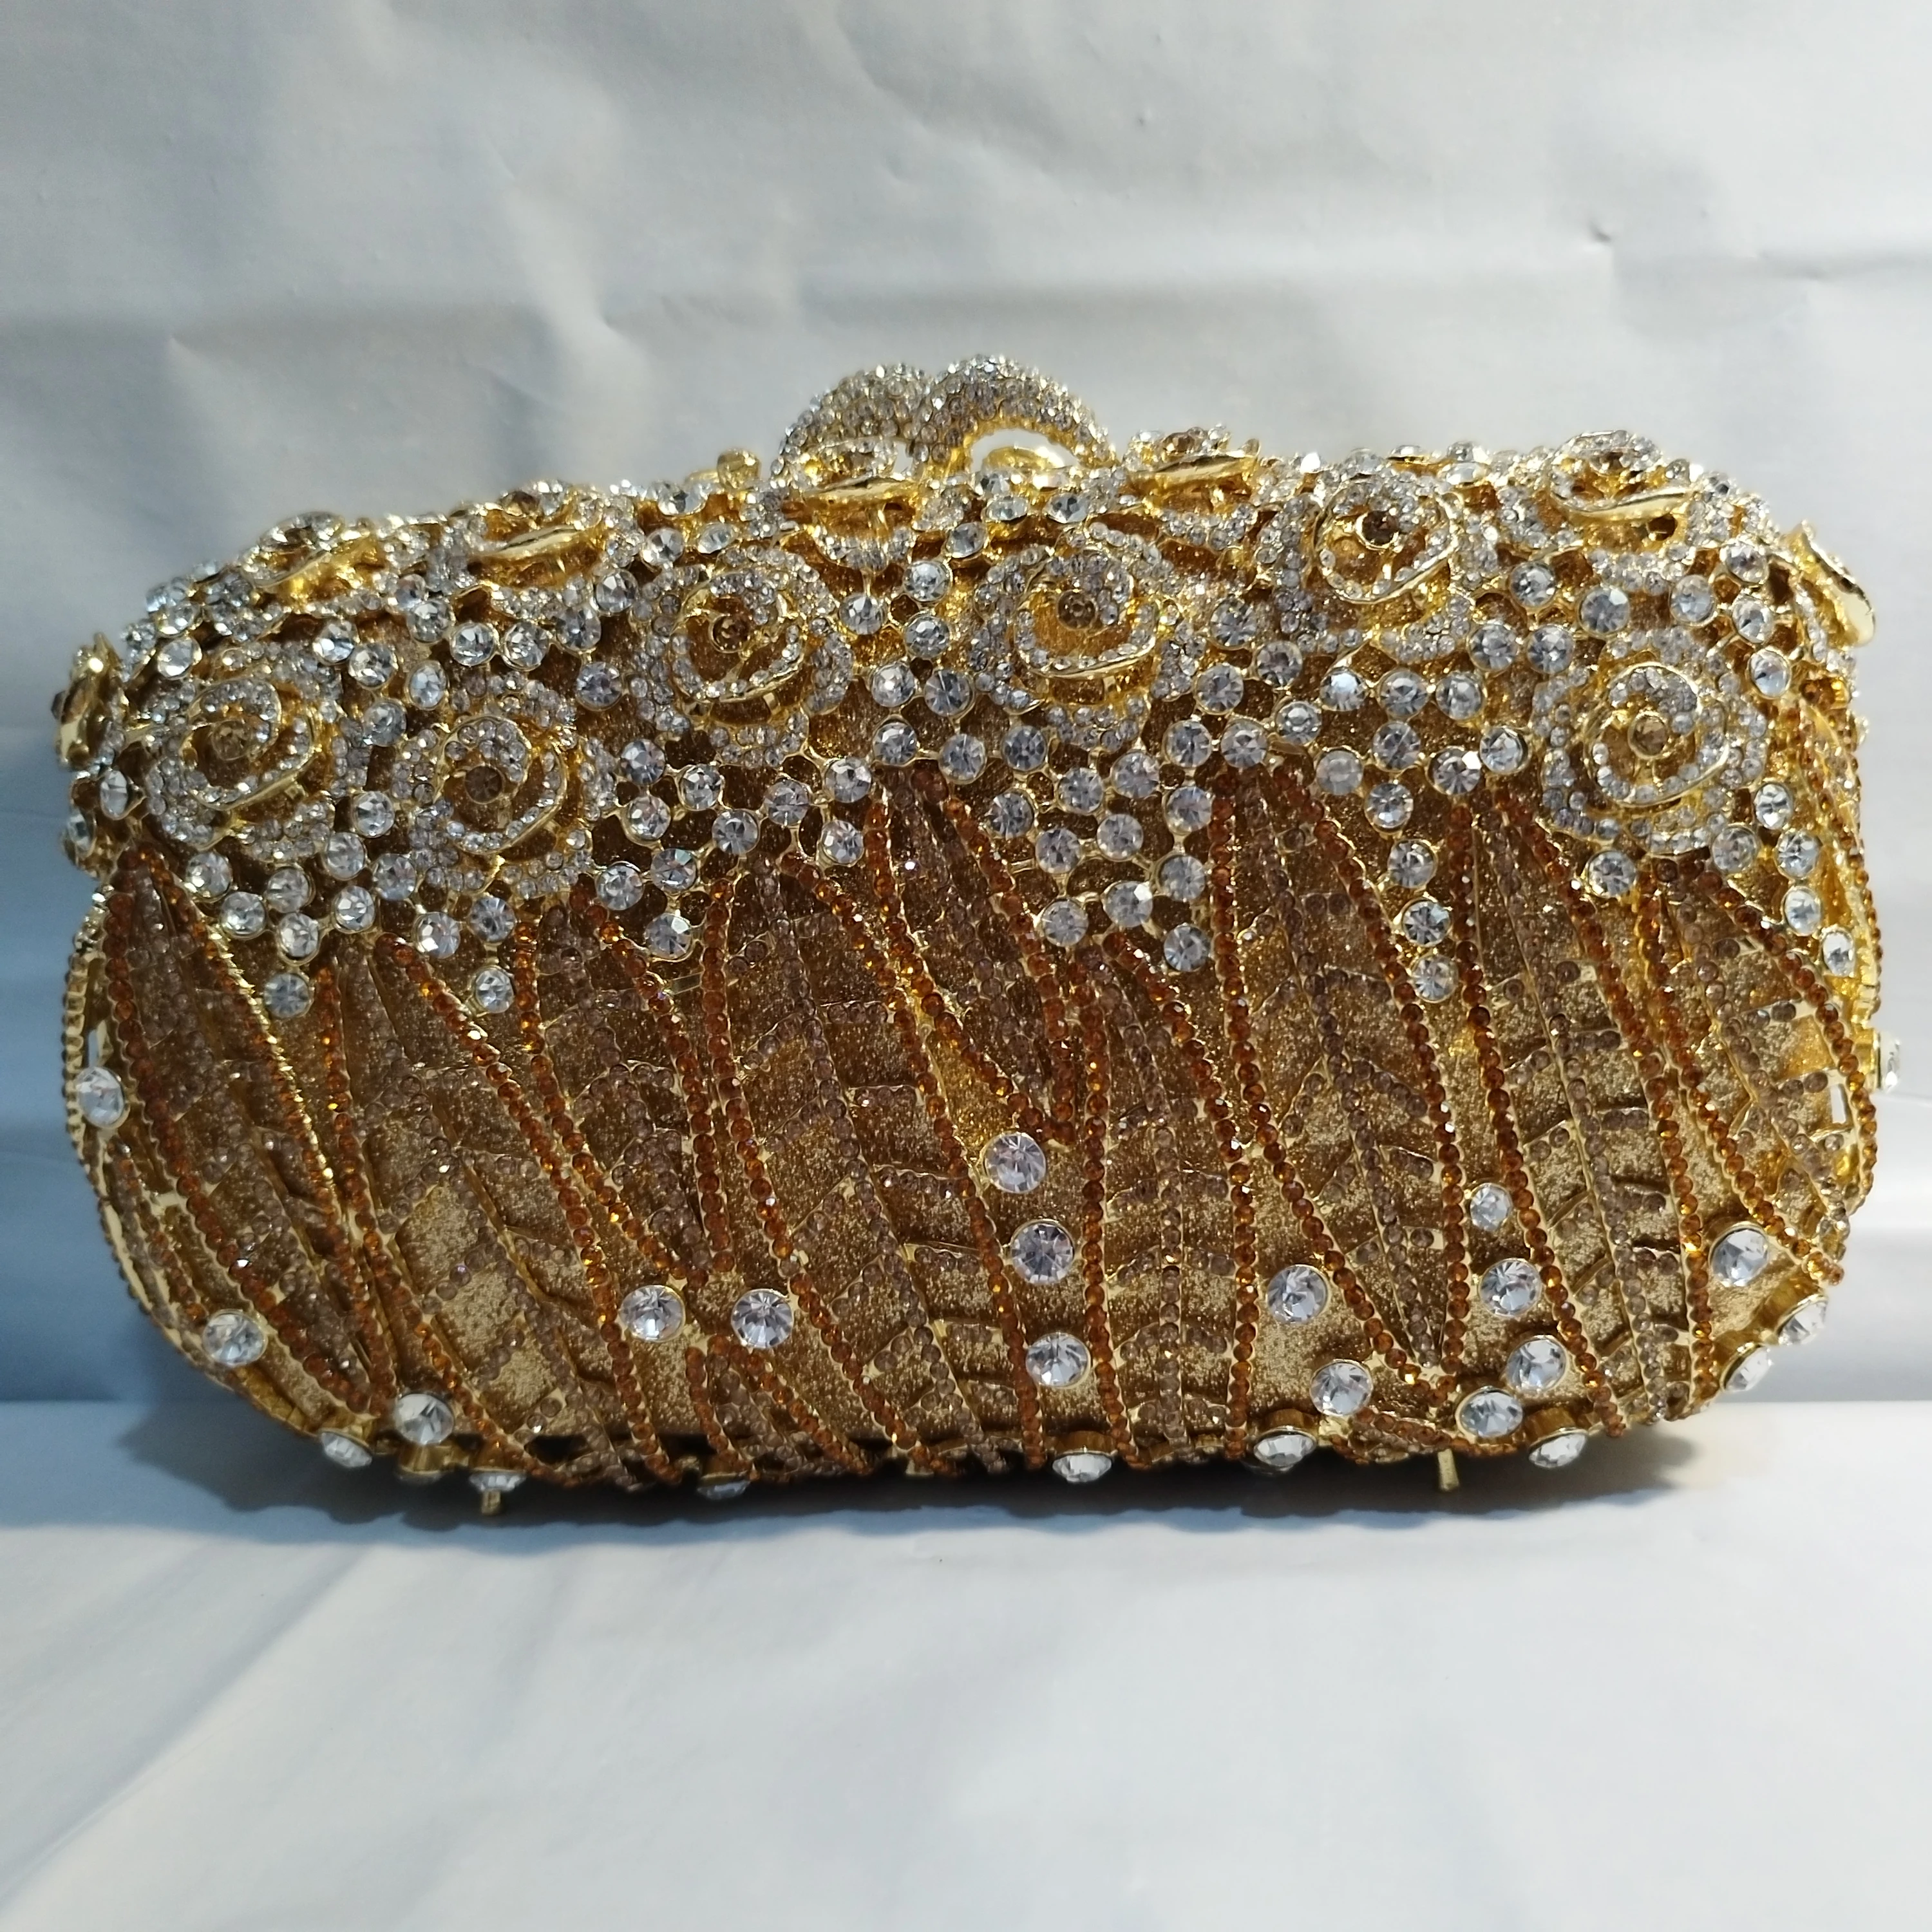 XIYUAN gold Clutch Purse Women Party Bag Luxury Handbag Crystal